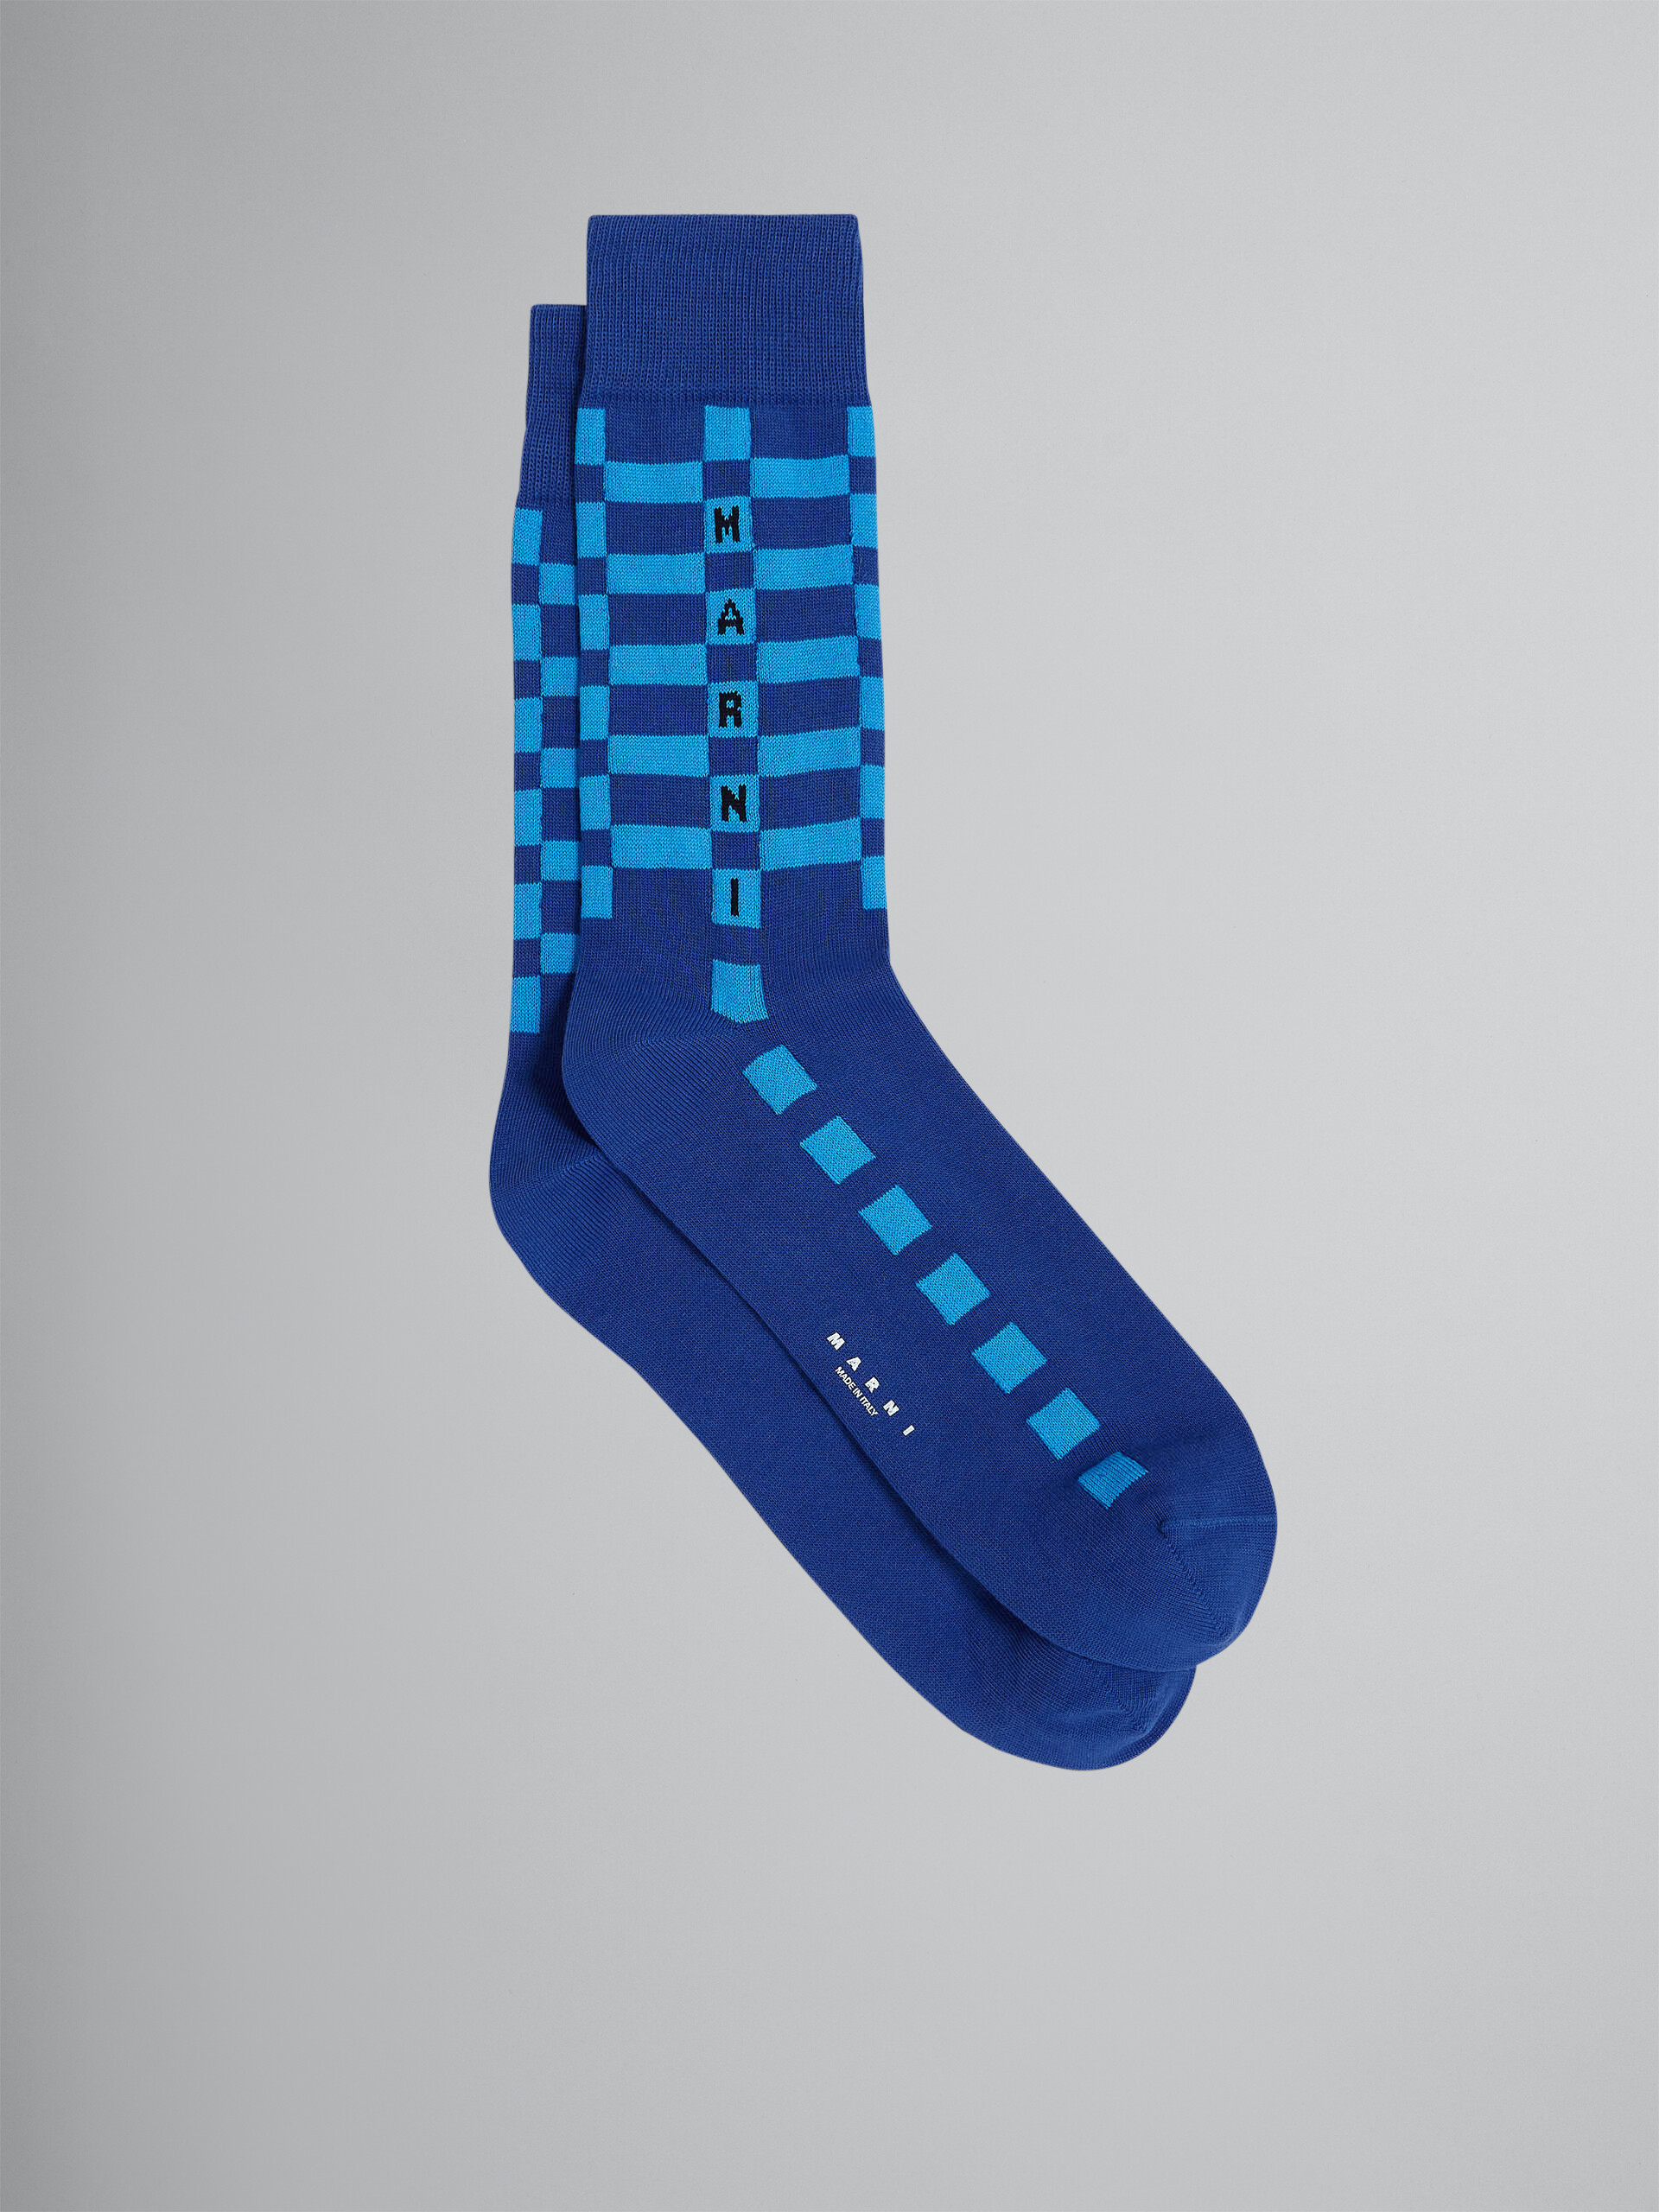 Blue cotton and nylon socks - Socks - Image 1